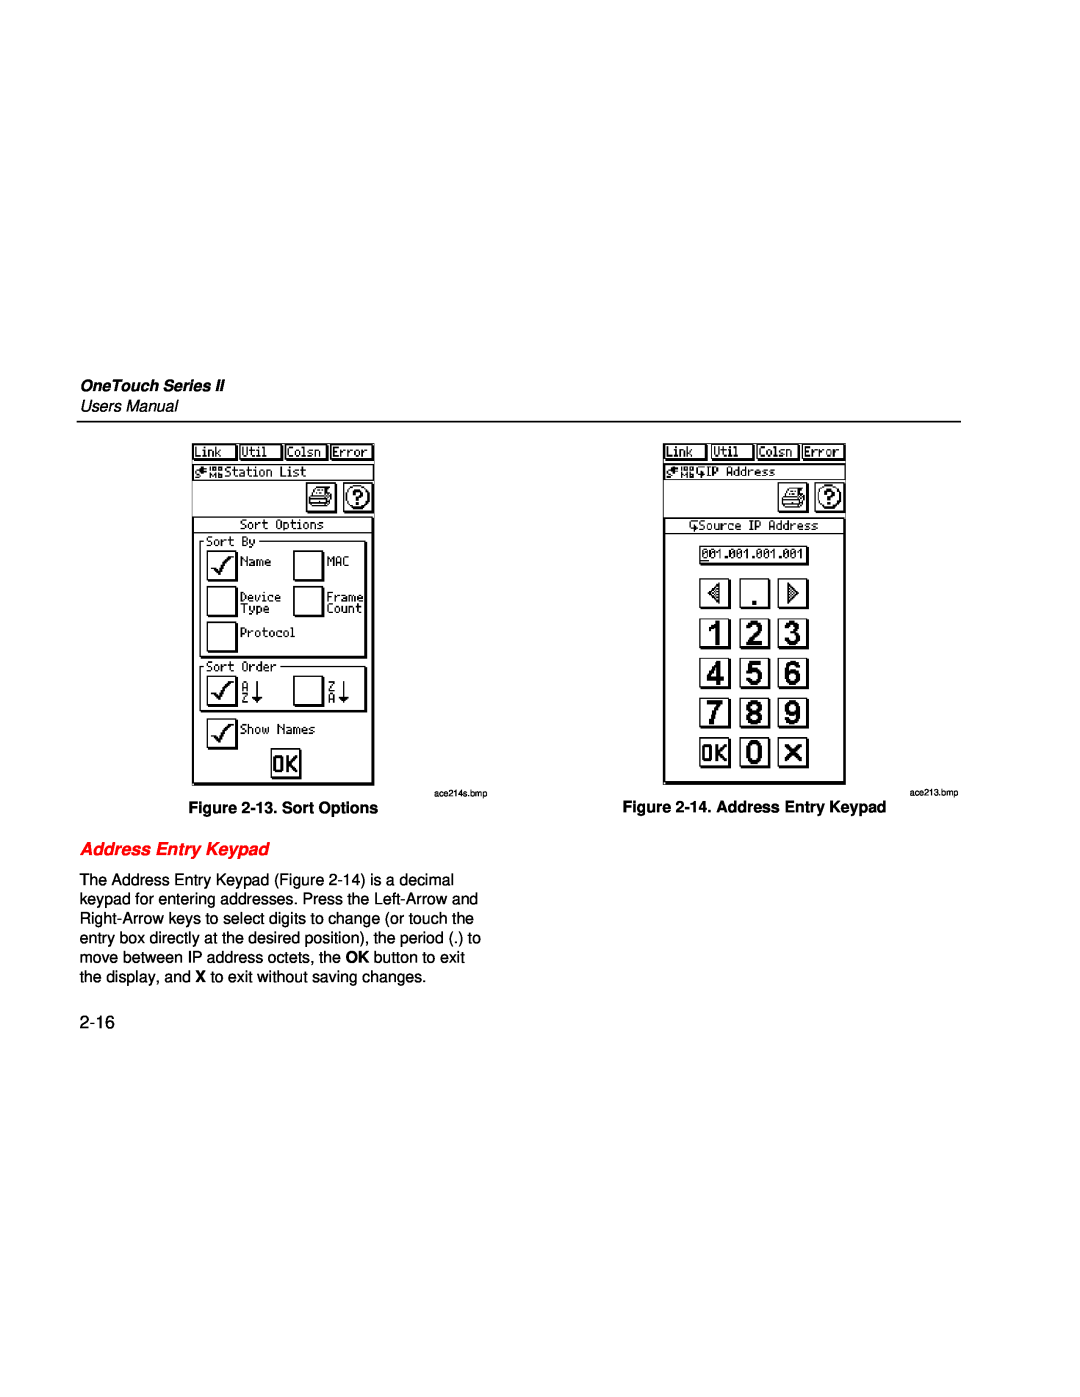 Fluke Series II user manual 2-16, OneTouch Series, Users Manual, 13. Sort Options, 14. Address Entry Keypad 